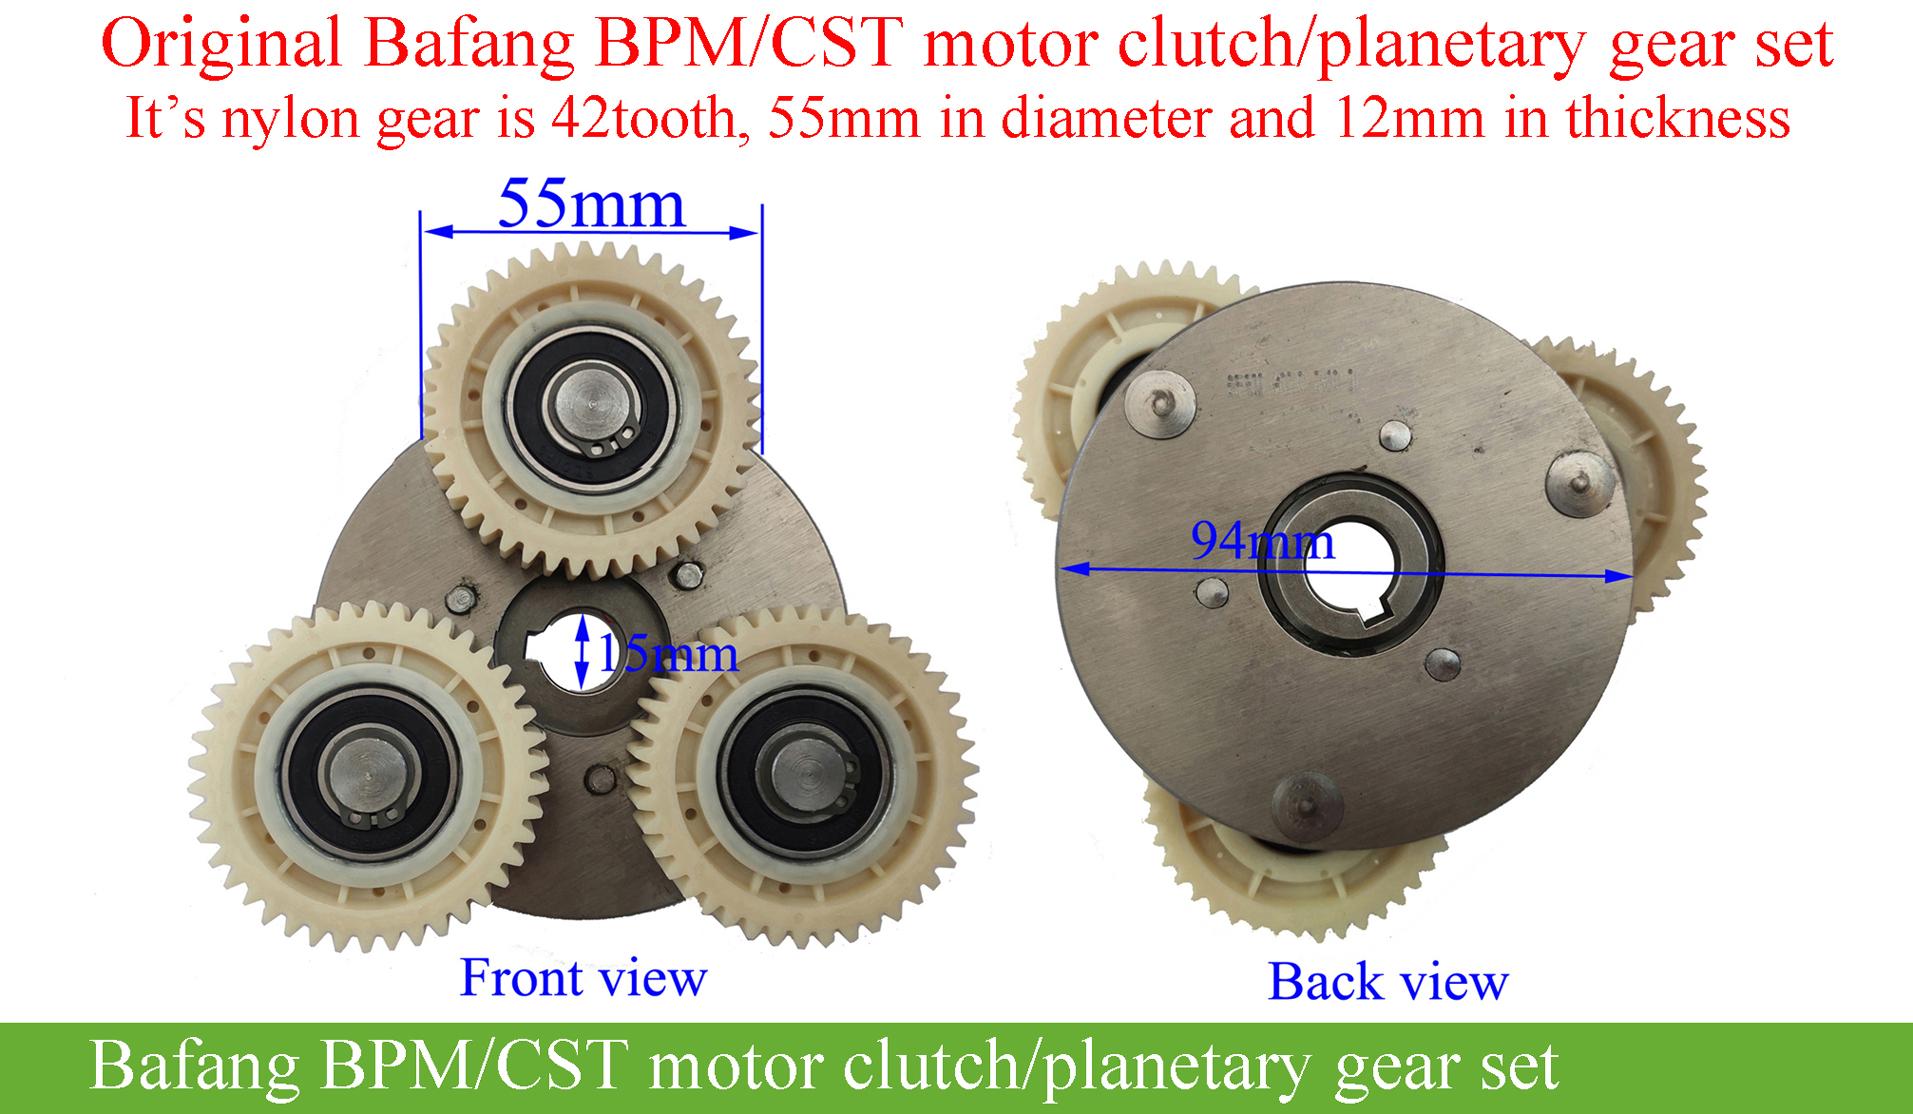 Bafang hub motor clutch/planetary gear set for Bafang H610, H620, RM G070,  8FUN BPM, 8FUN CST hub motors- BBS, ebike batteries, Bafang  M620, Bafang M600, Bafang M500, Bafang M510, KT controller with